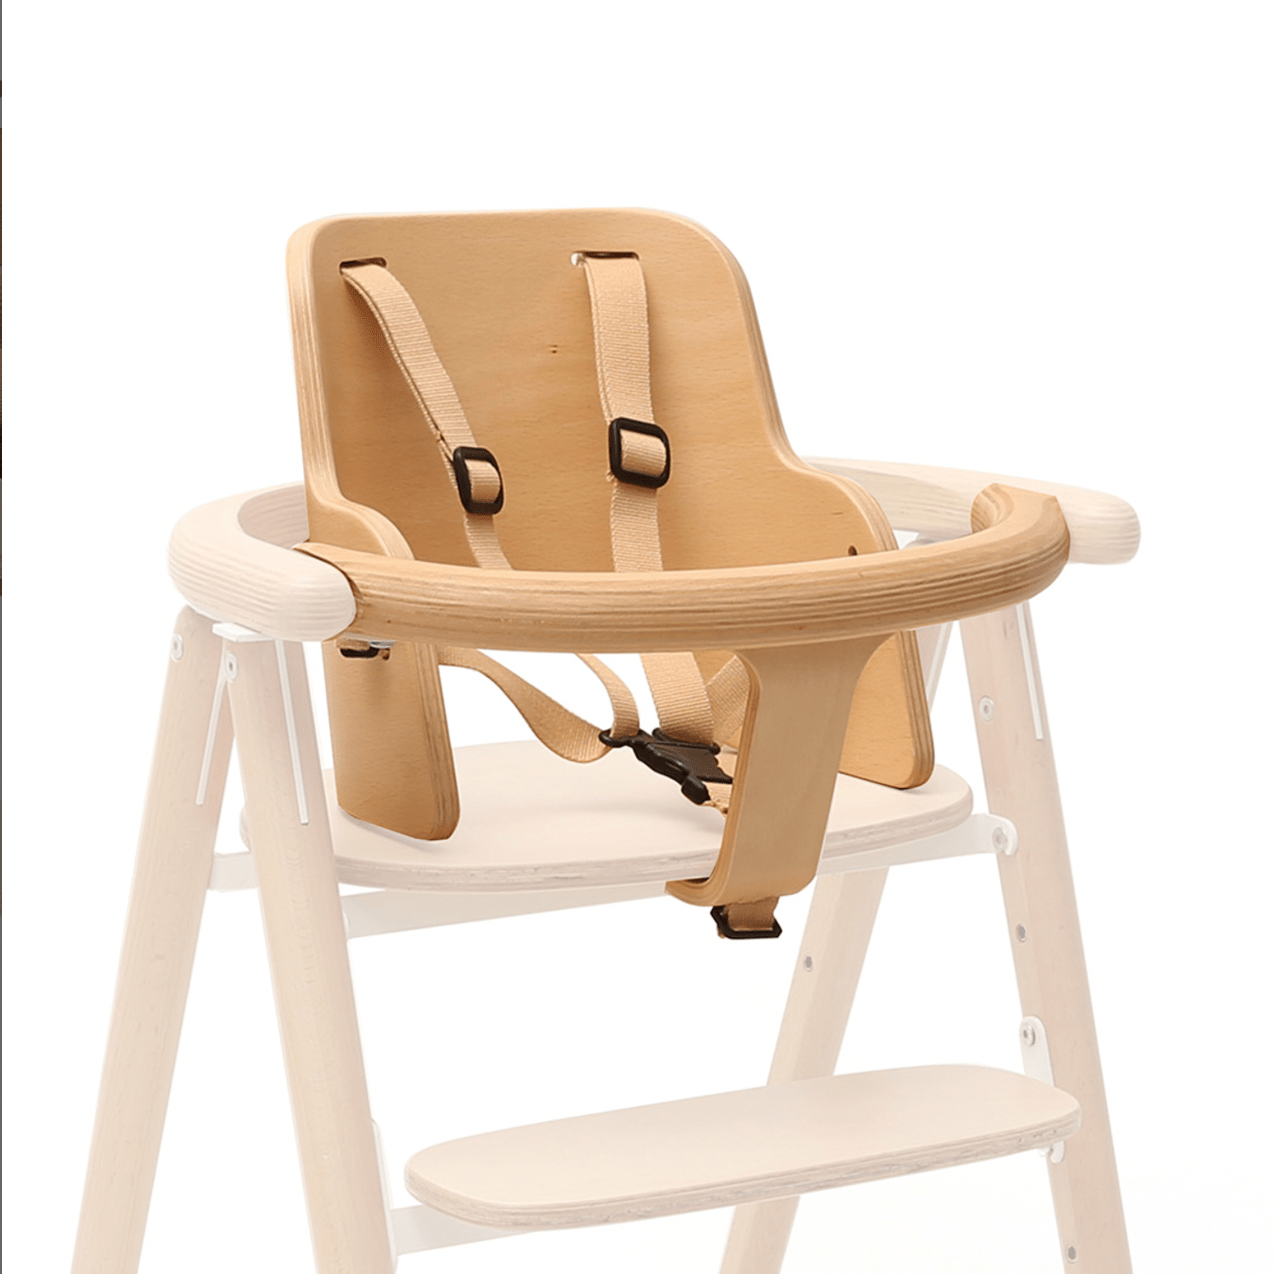 Charlie Crane TOBO High Chair Baby Set, en del av kategorien Furniture - At Home Interiør